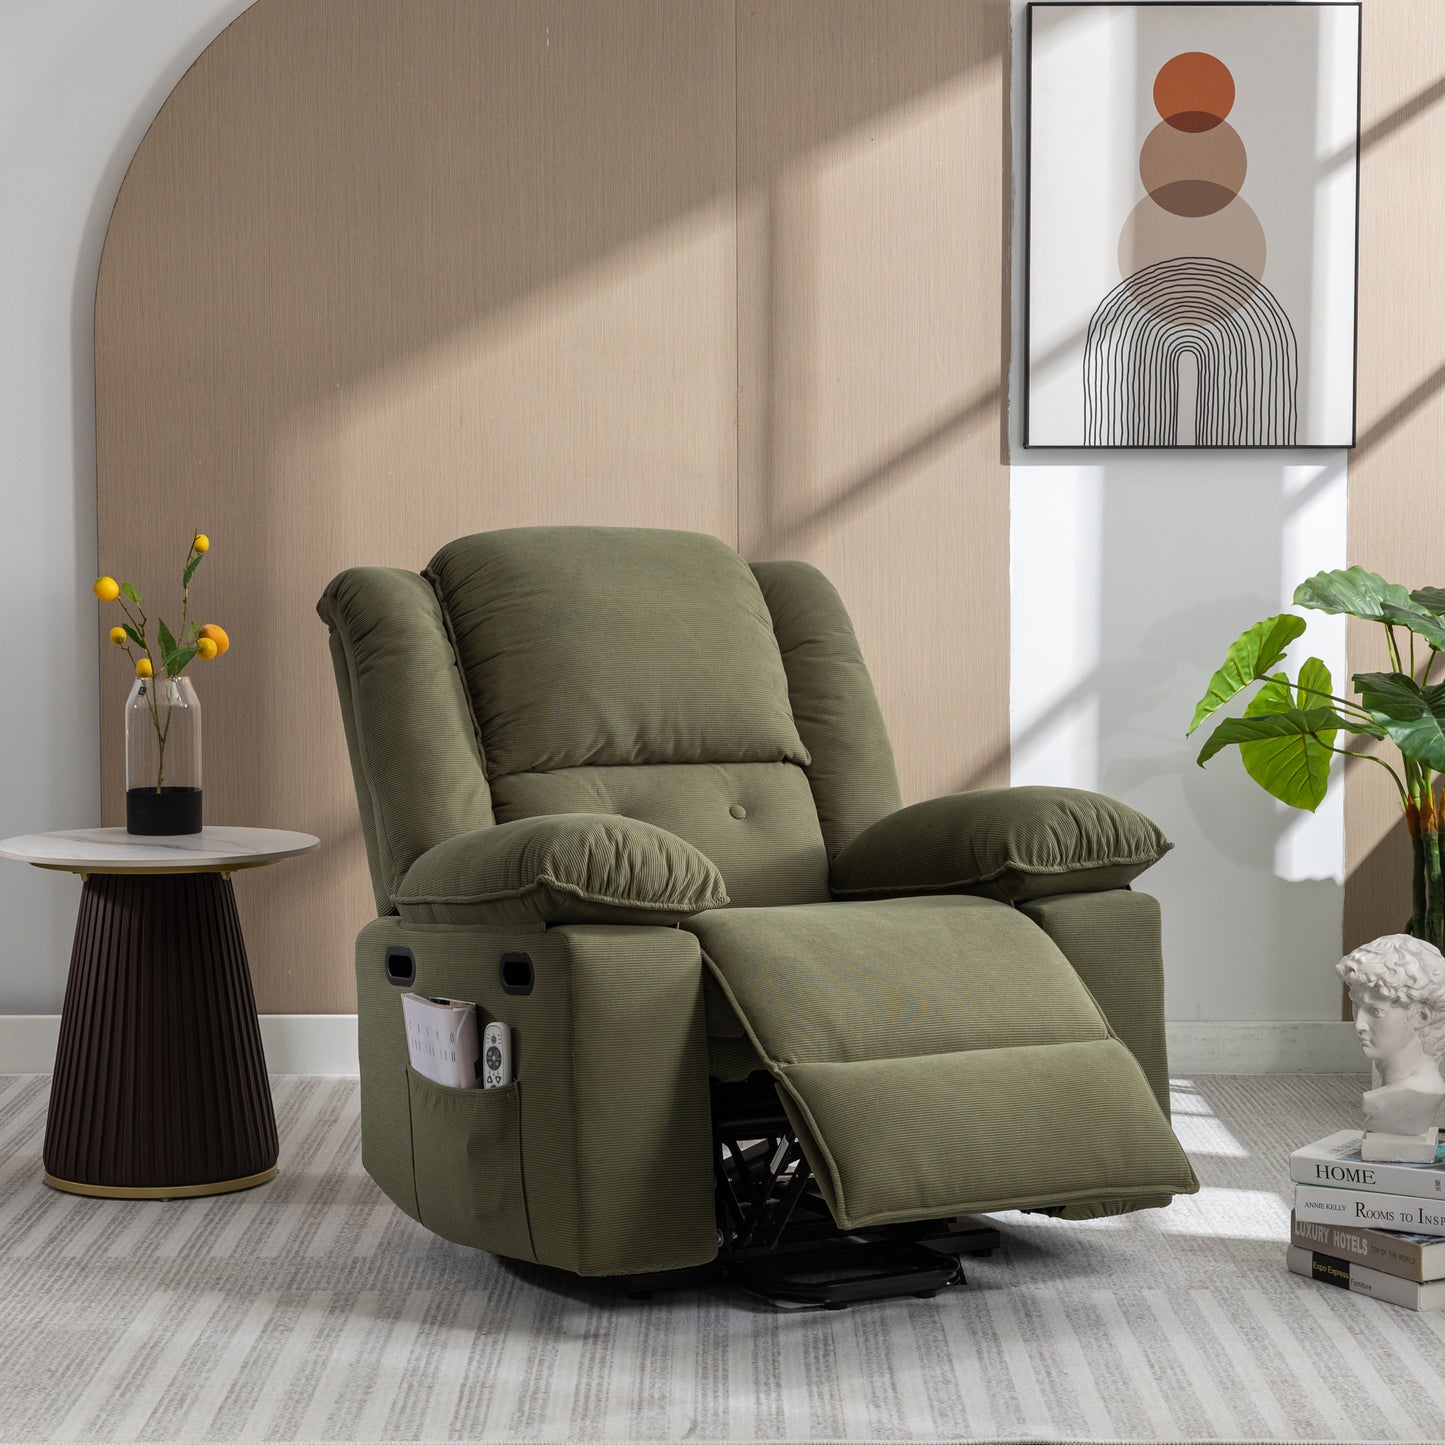 Massage Recliner, Power Lift Chair, Heating, Side Pocket